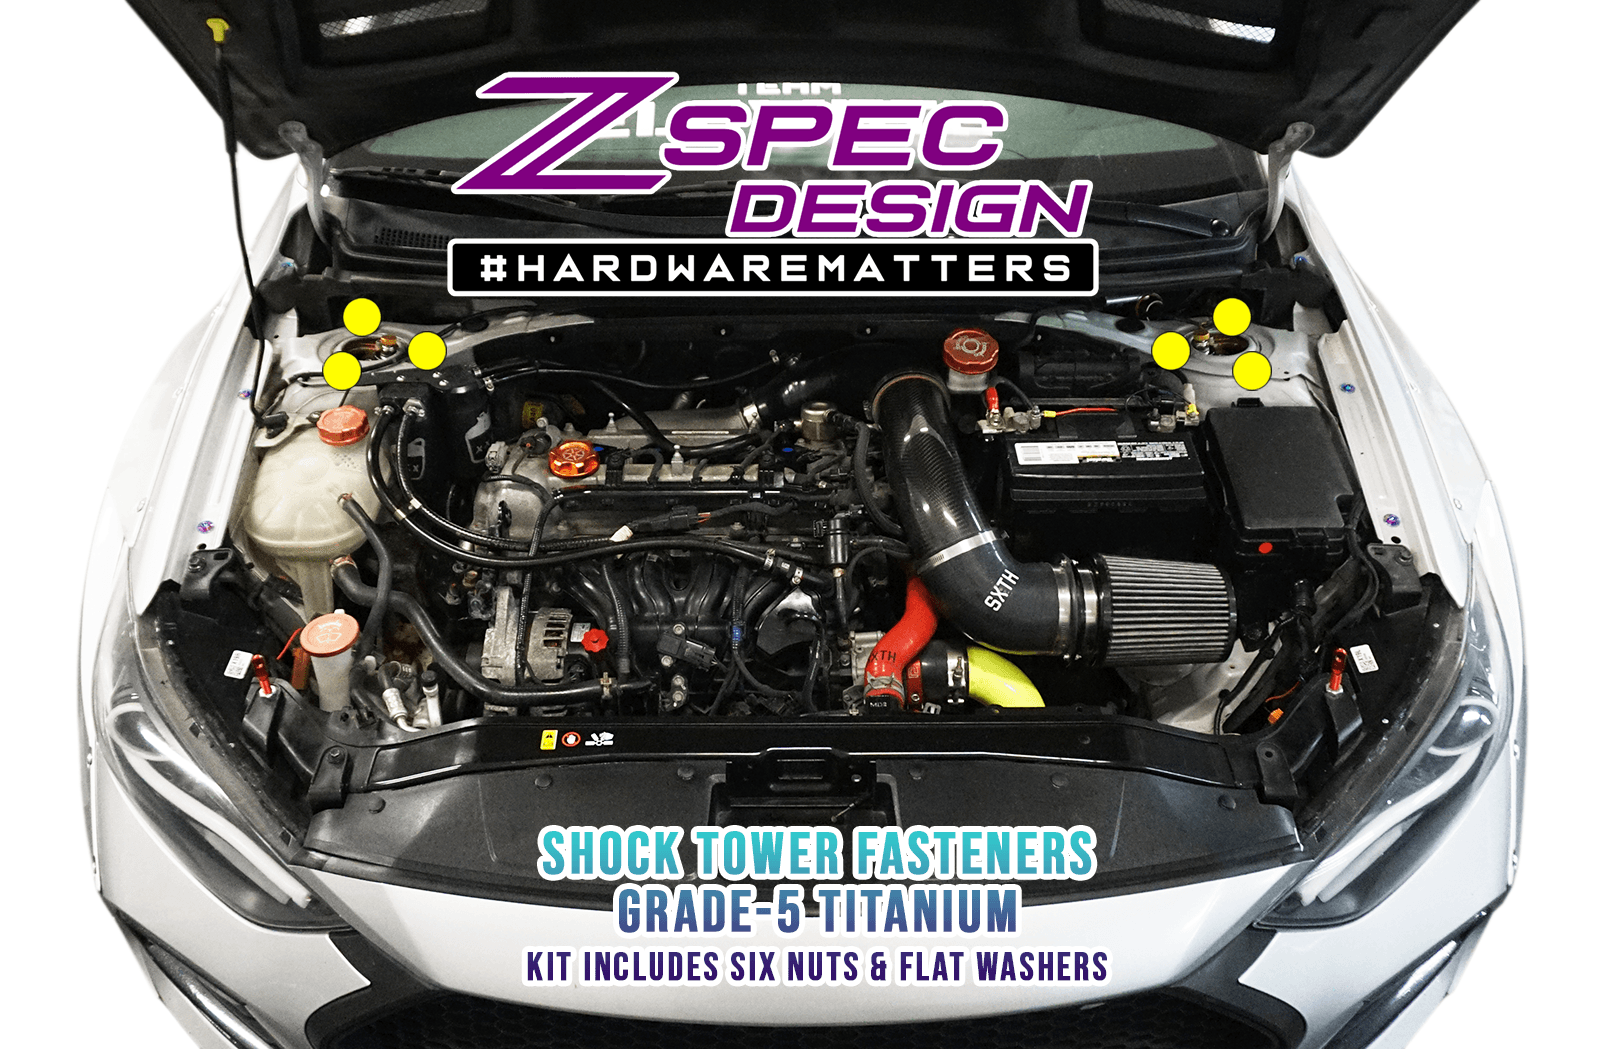 ZSPEC Front Shocks Struts Dress Up Bolts® Fastener Kit for '17+ Hyundai Elantra, Titanium  Engine Bay Dress Up Hardware Kit Upgrade Performance Auto Car Import JDM KDM USDM Grade-5 GR5